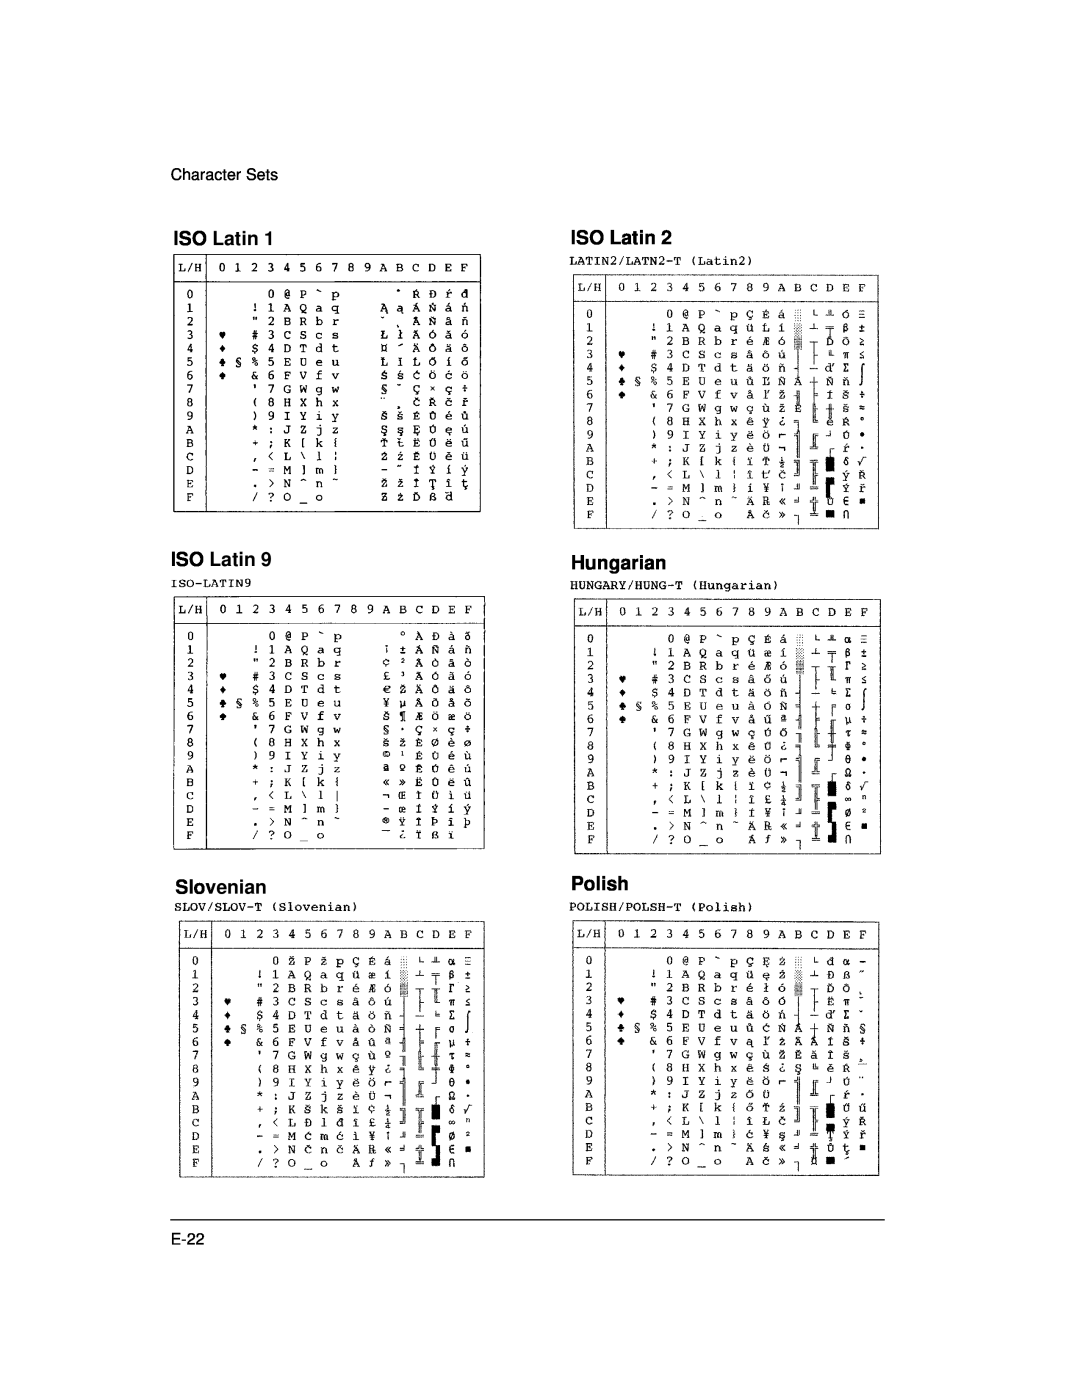 Genicom LA36 manual ISO Latin, Hungarian, Slovenian, Polish, Character Sets, E-22 